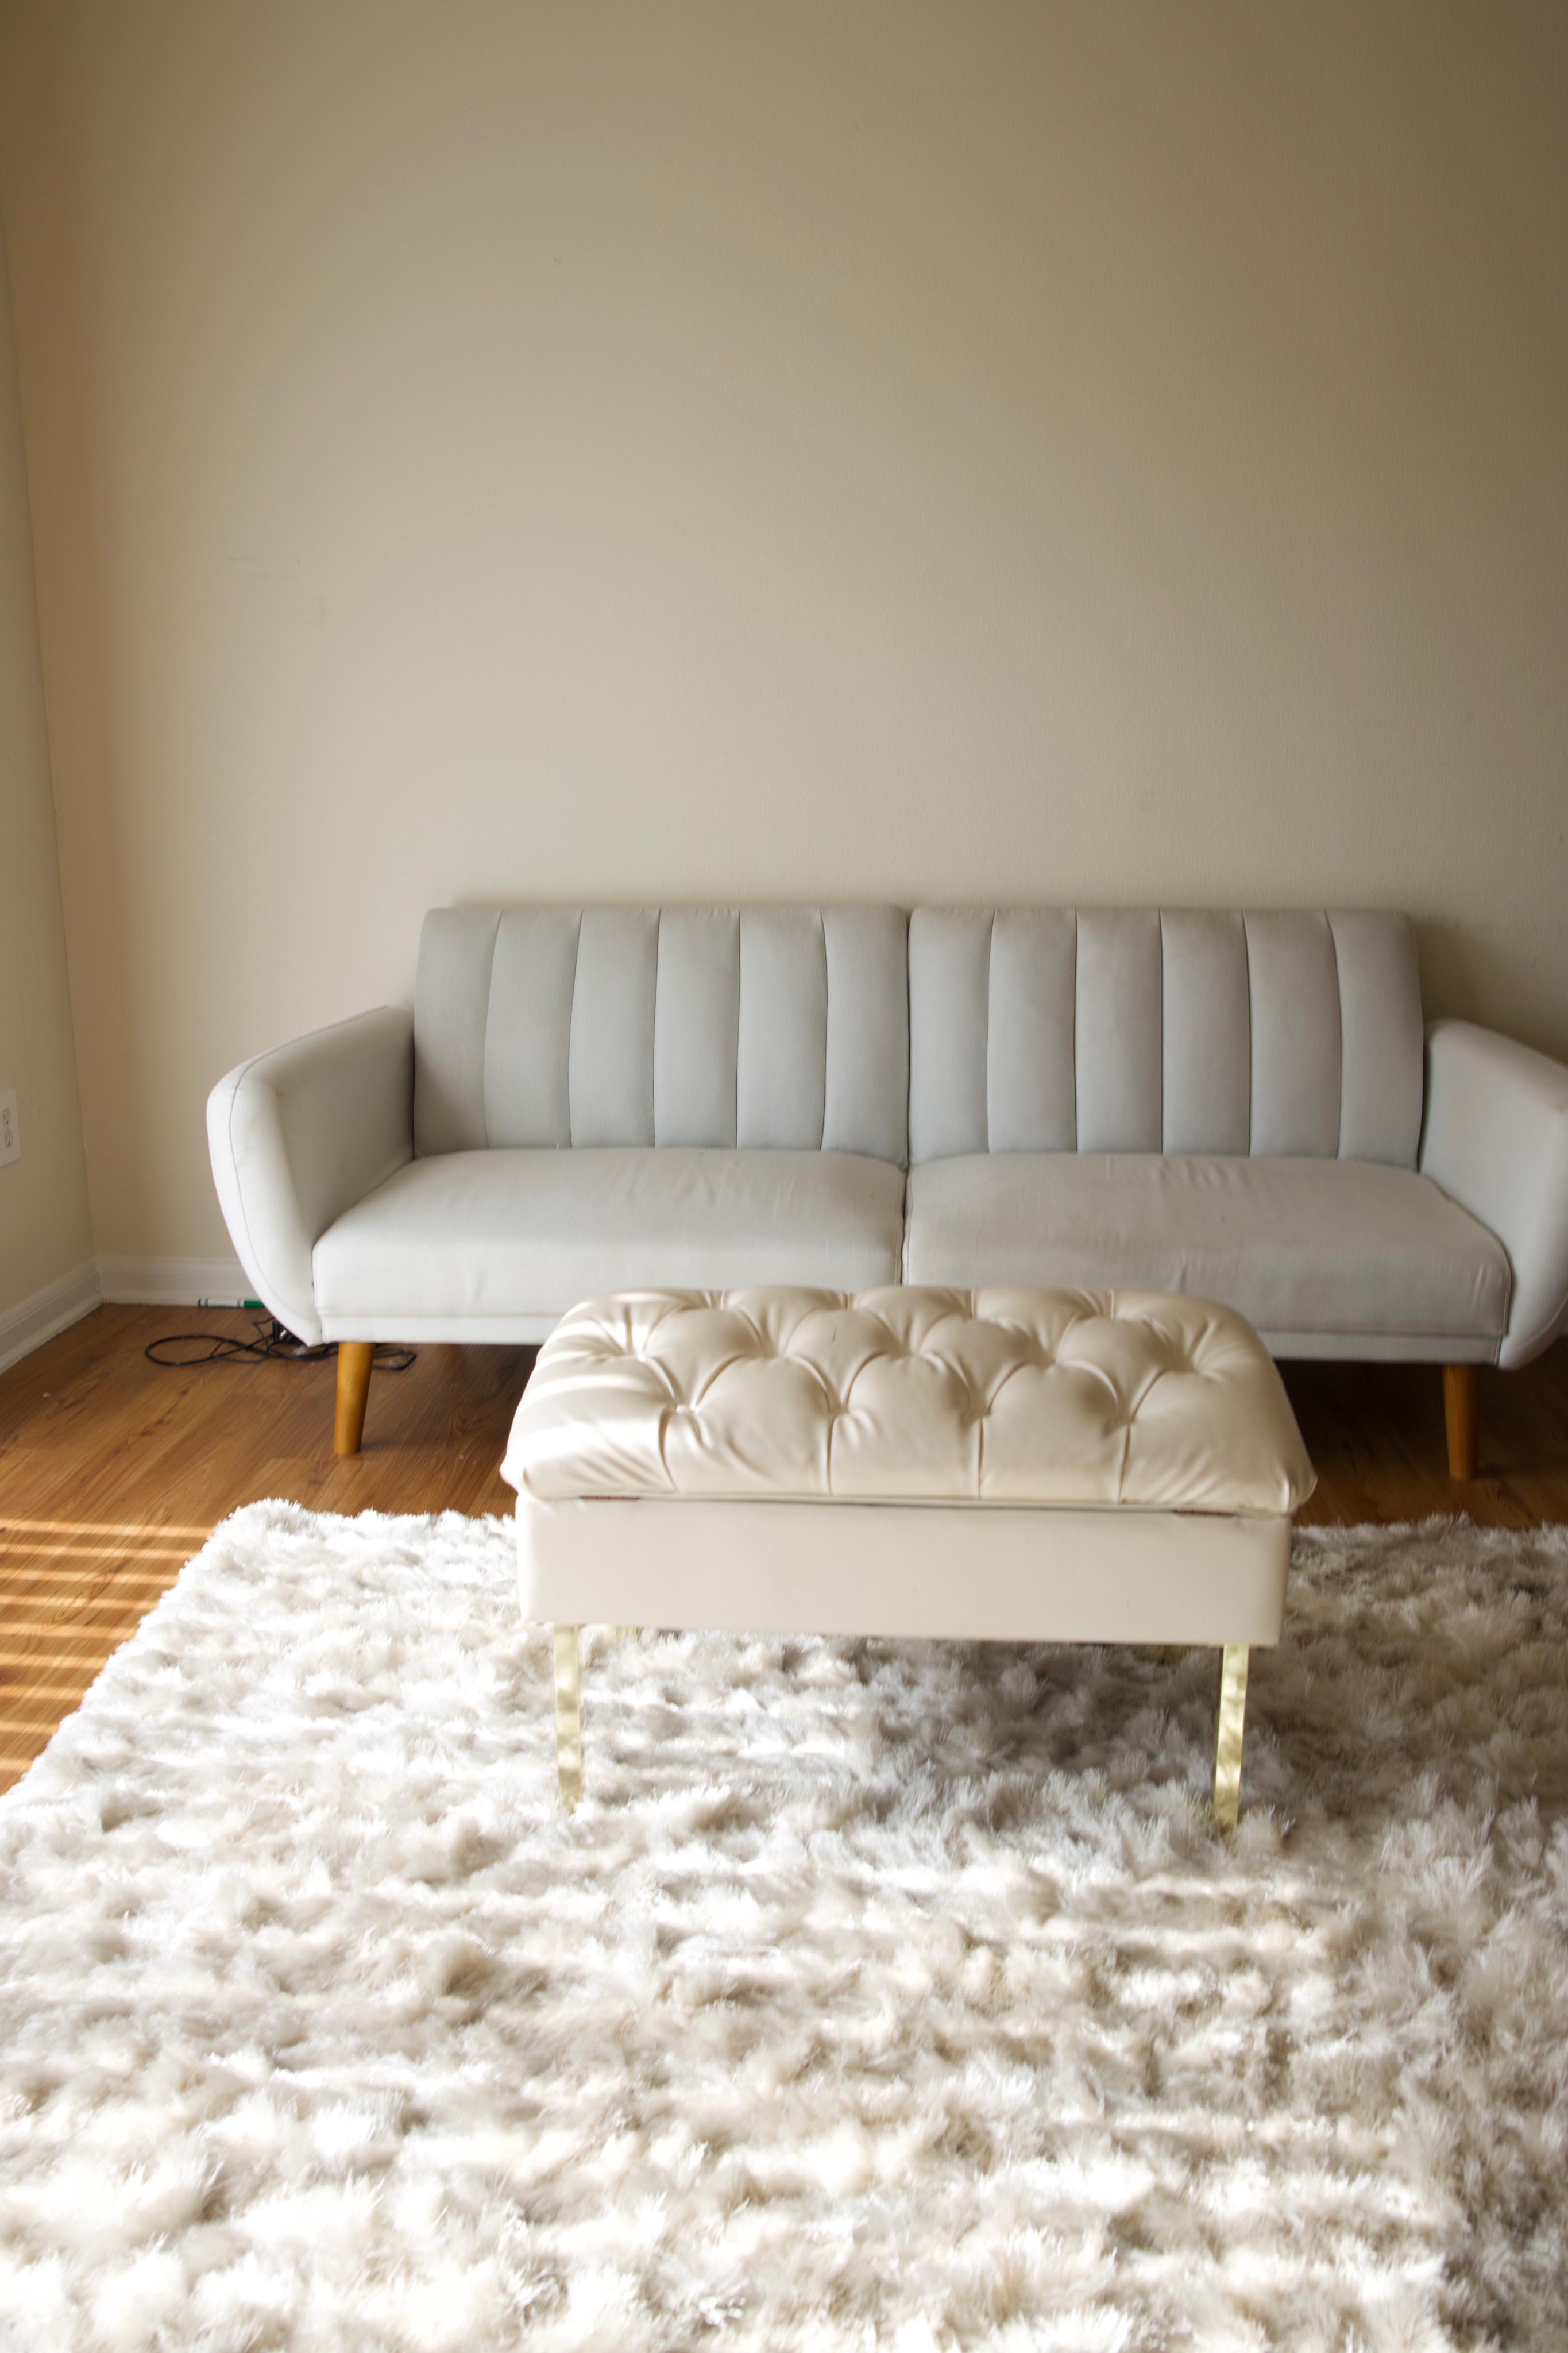 living room DIY renovation with Home Depot decor